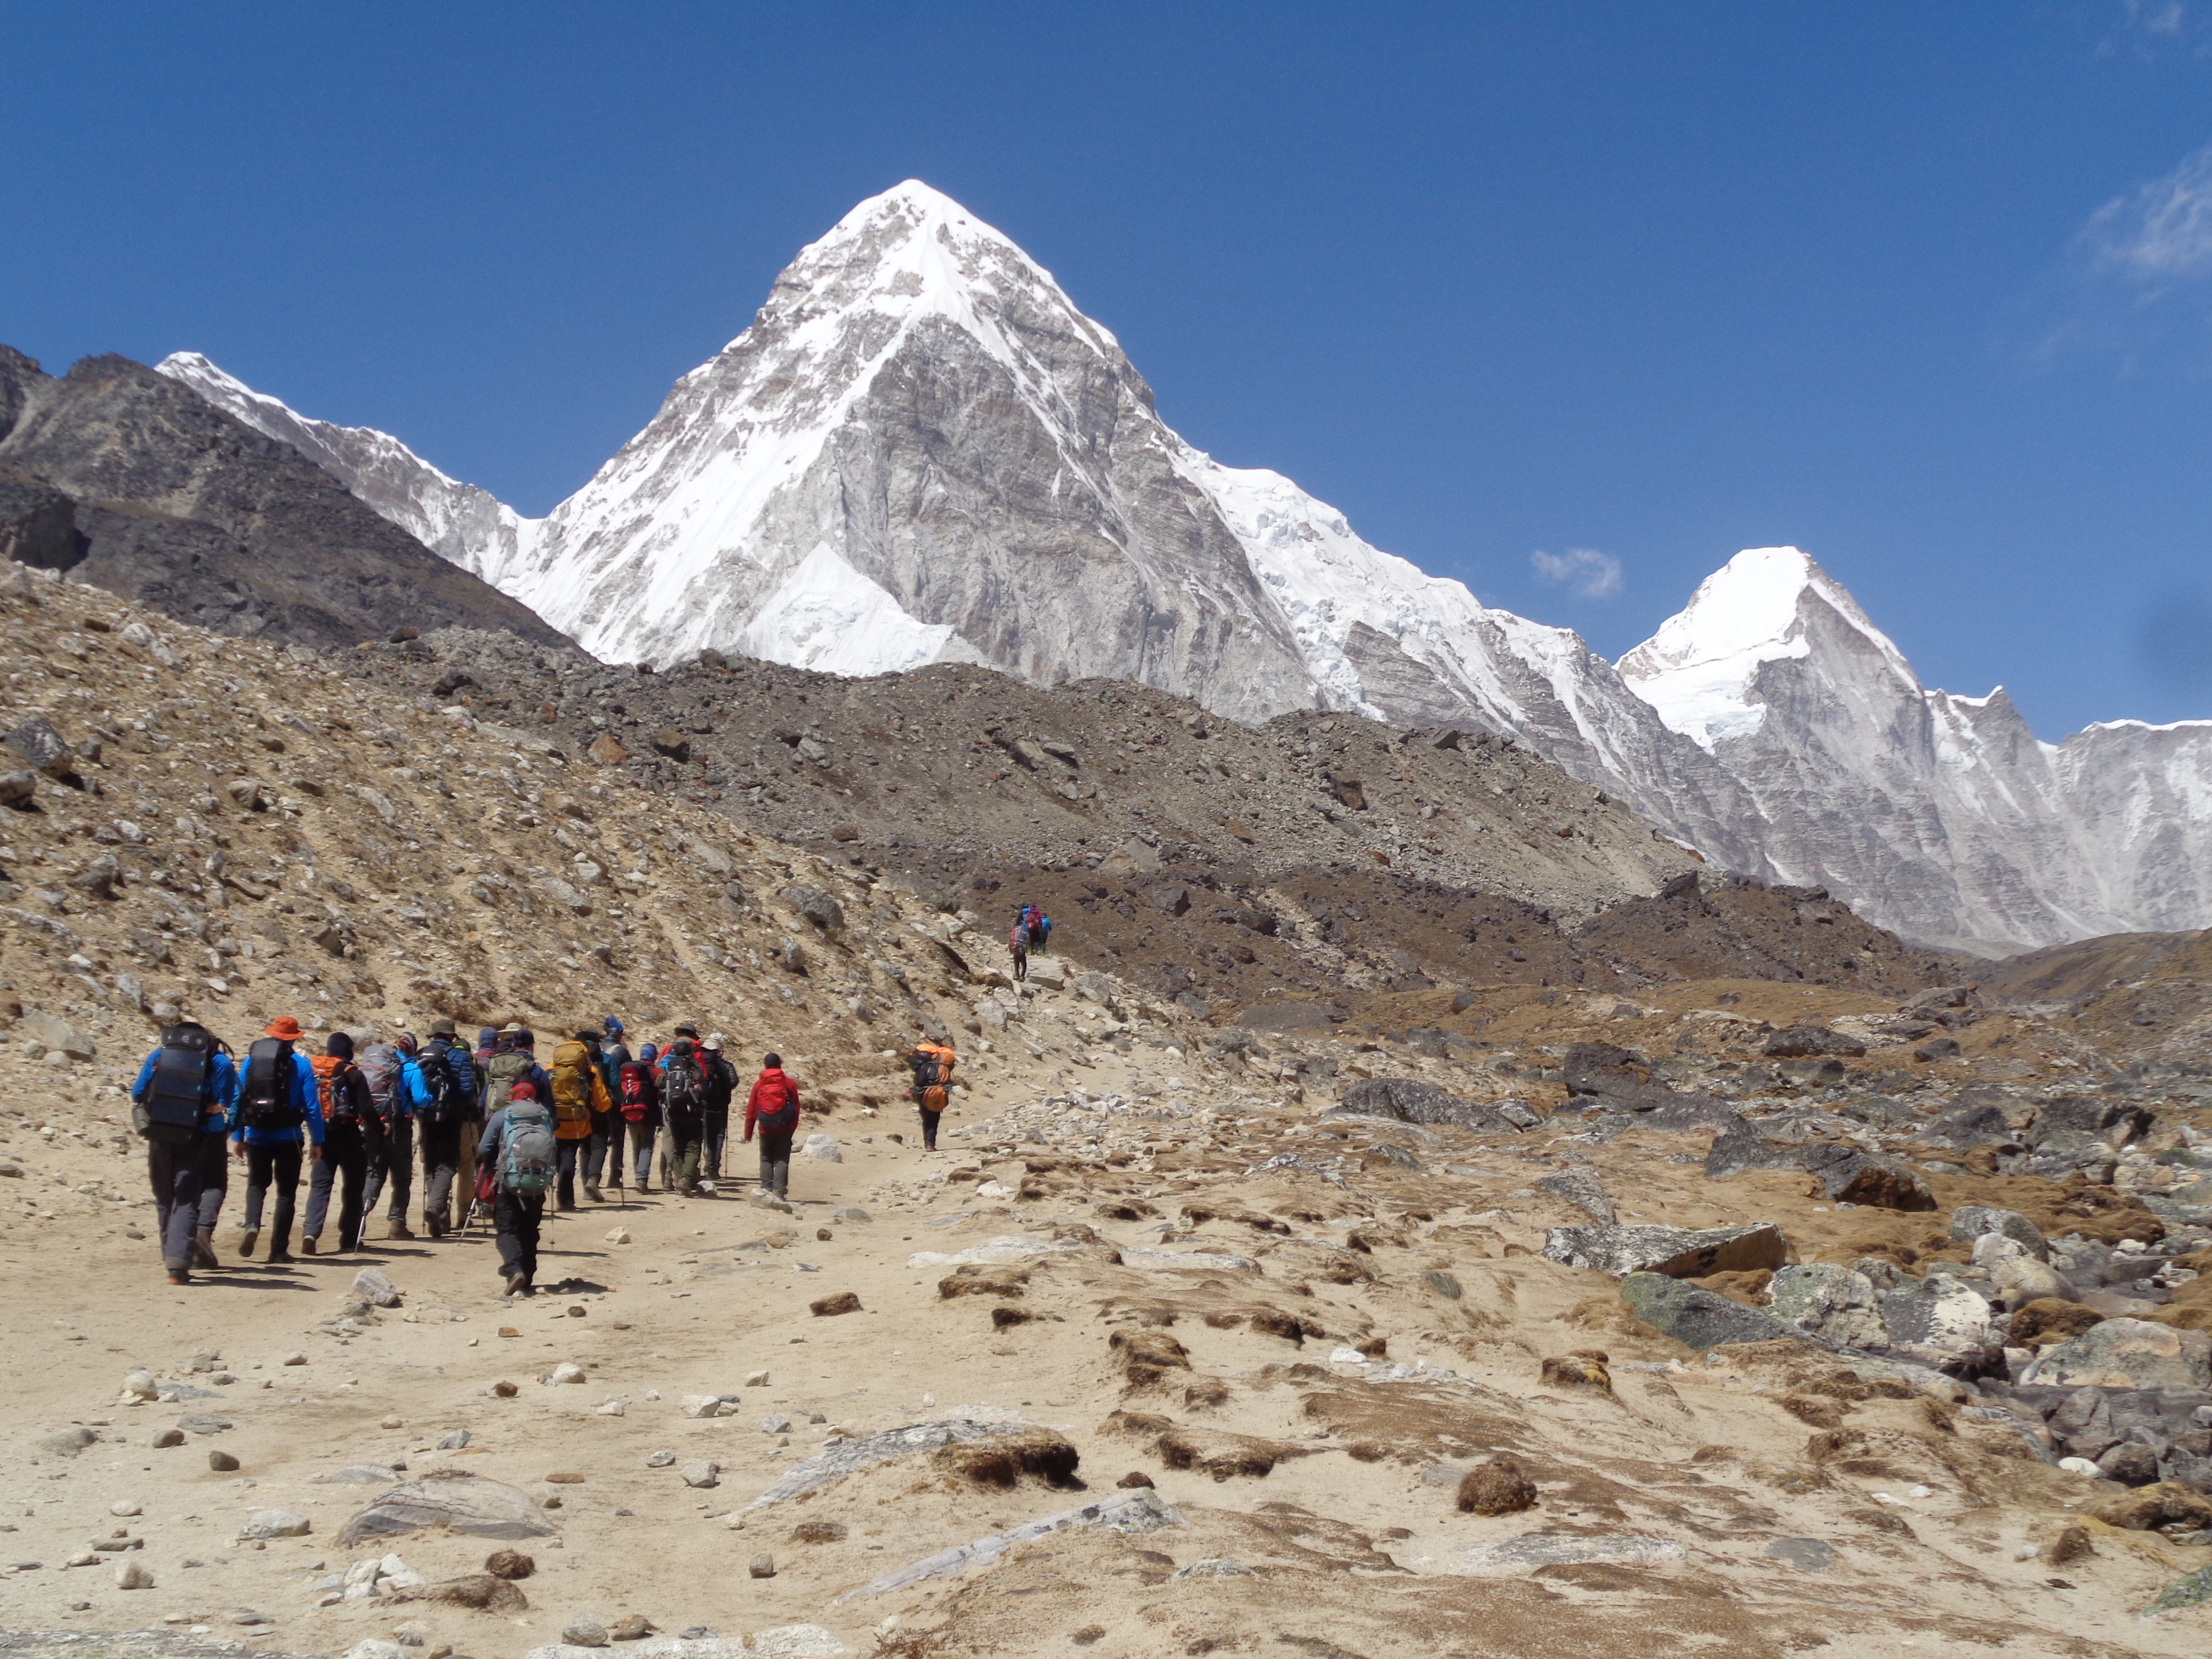 A view of Pumori near Mount Everest